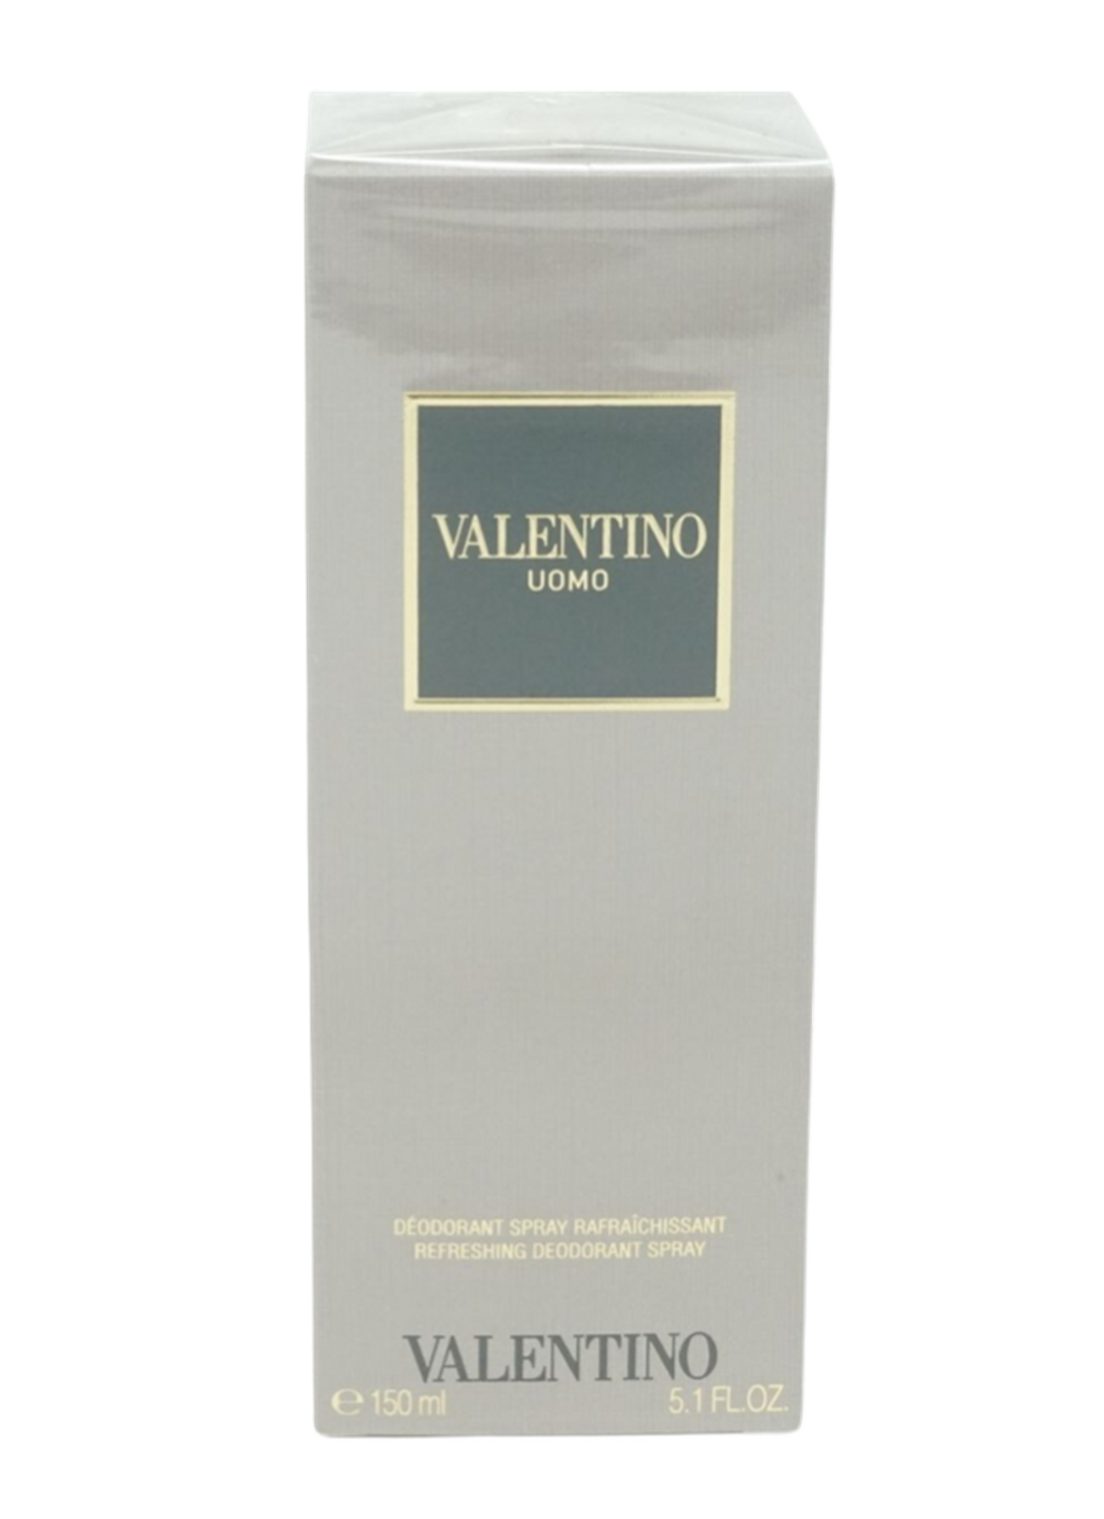 Valentino Körperspray Valentino Uomo Deodorant Spray 150ml, Valentino